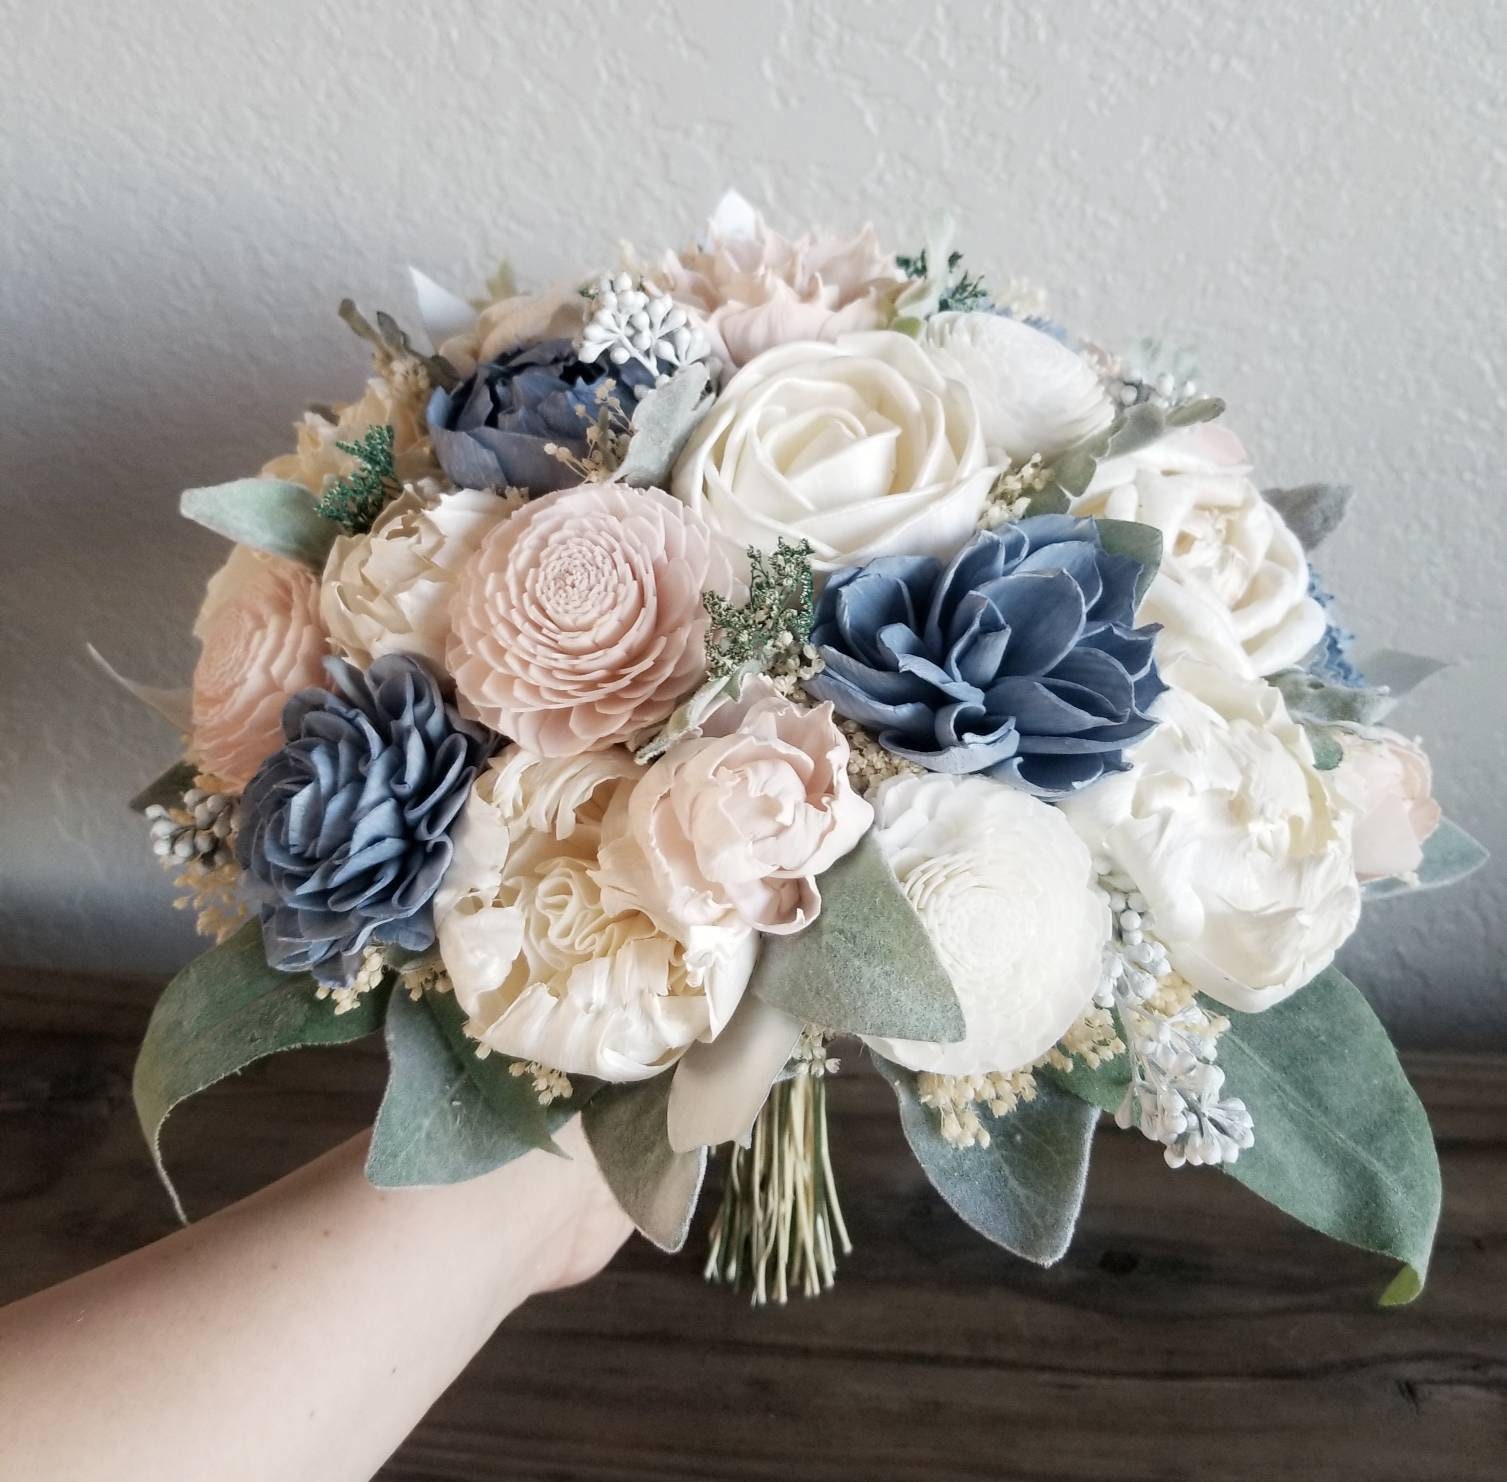 Wedding Bouquet - Peach/Blush/Blue - Dried Flowers Forever